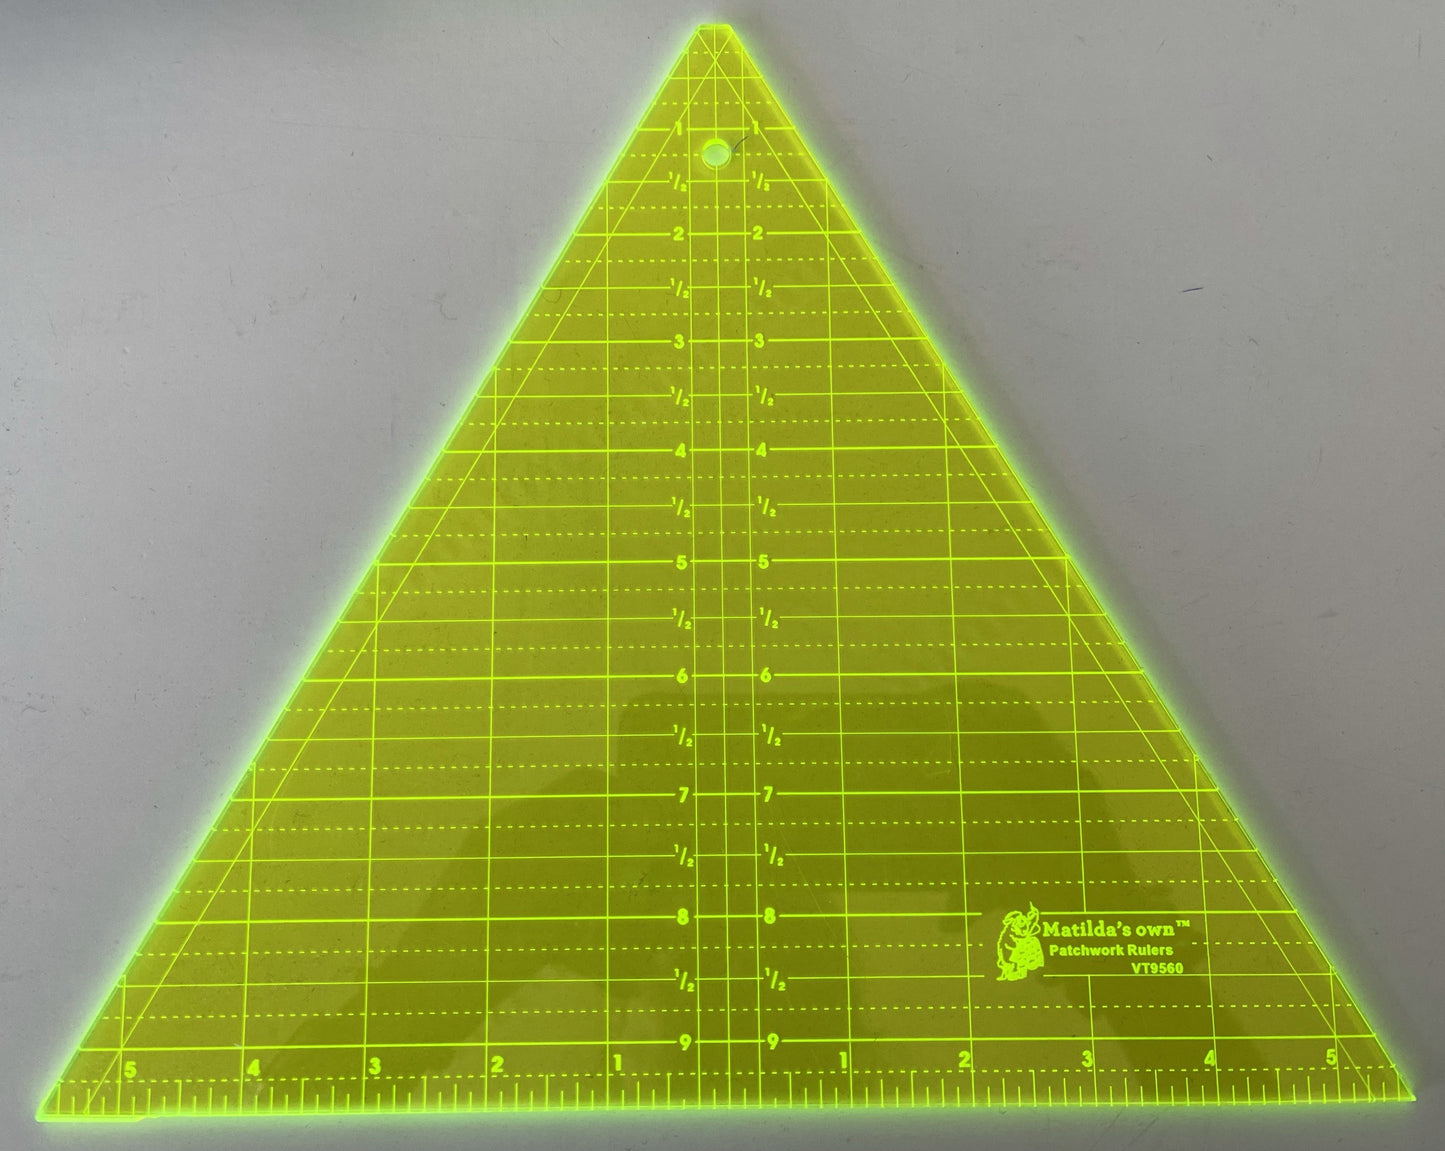 60 degree Triangle Ruler